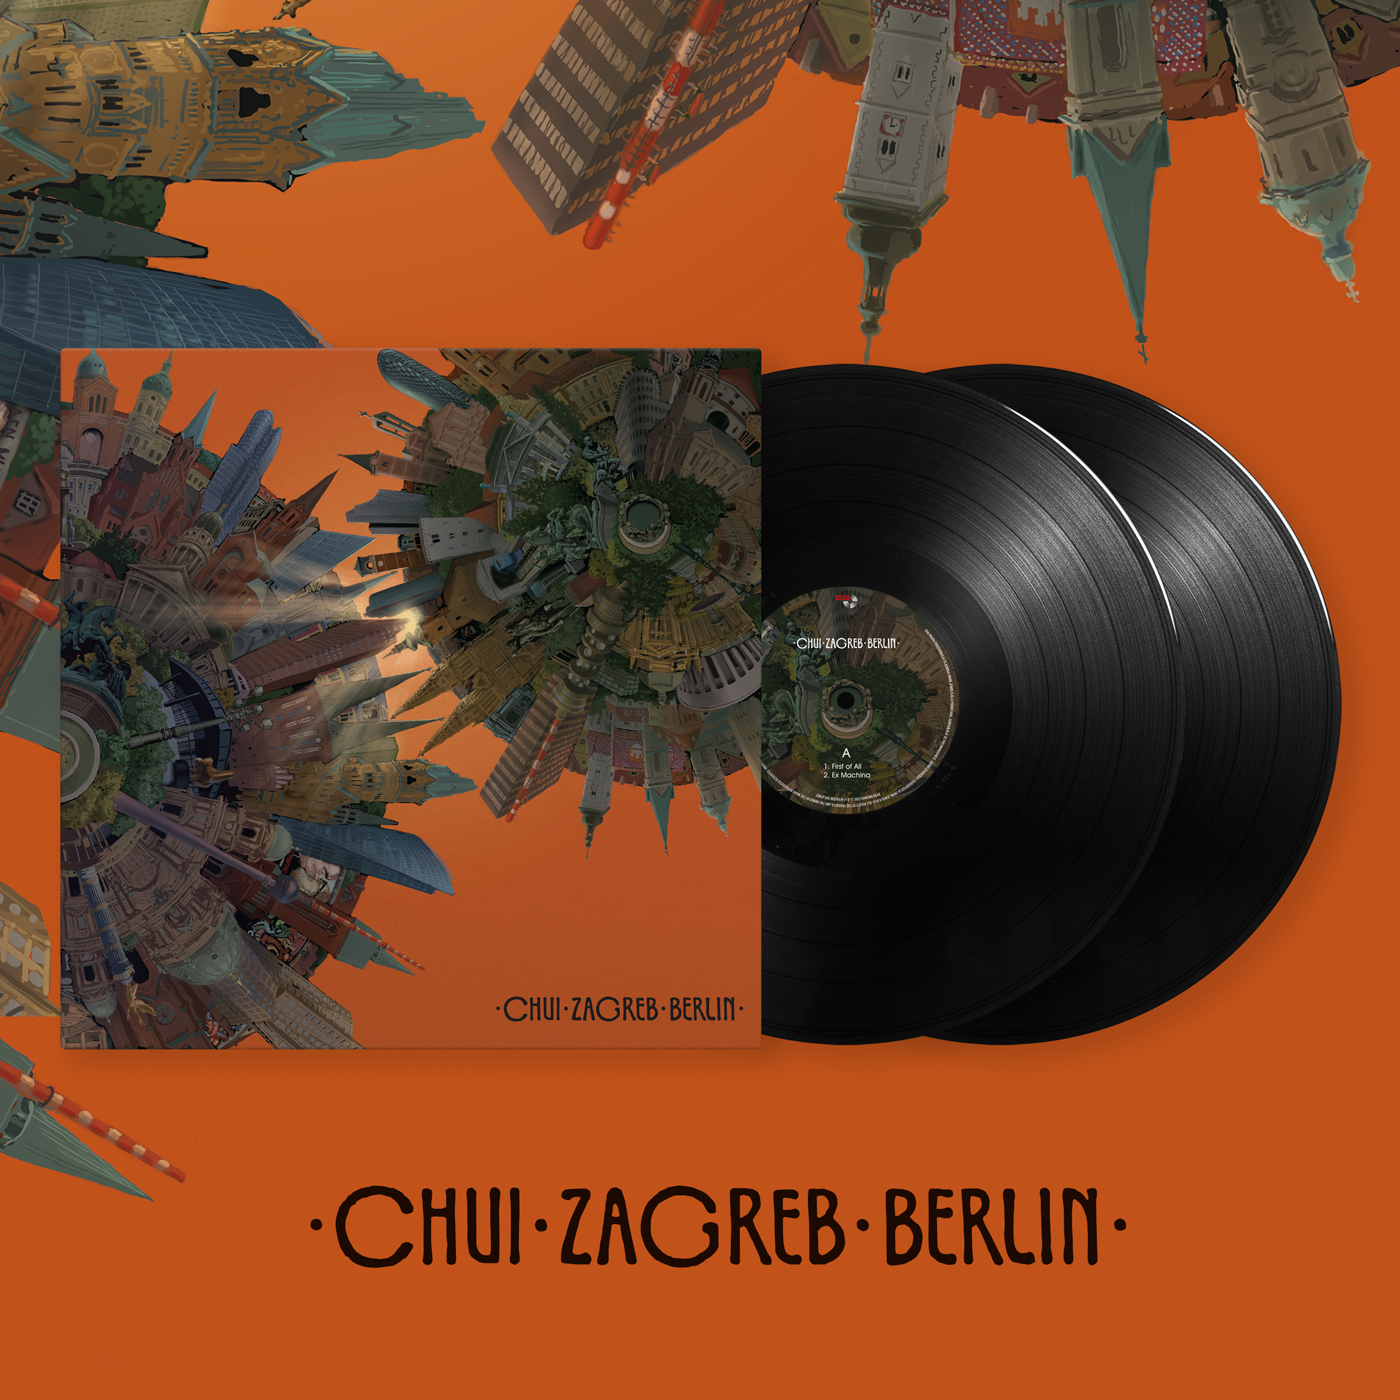 Read more about the article Chui objavljuju vinilno izdanje “Zagreb-Berlin” na kojem je zablistala veličanstvena naslovnica albuma